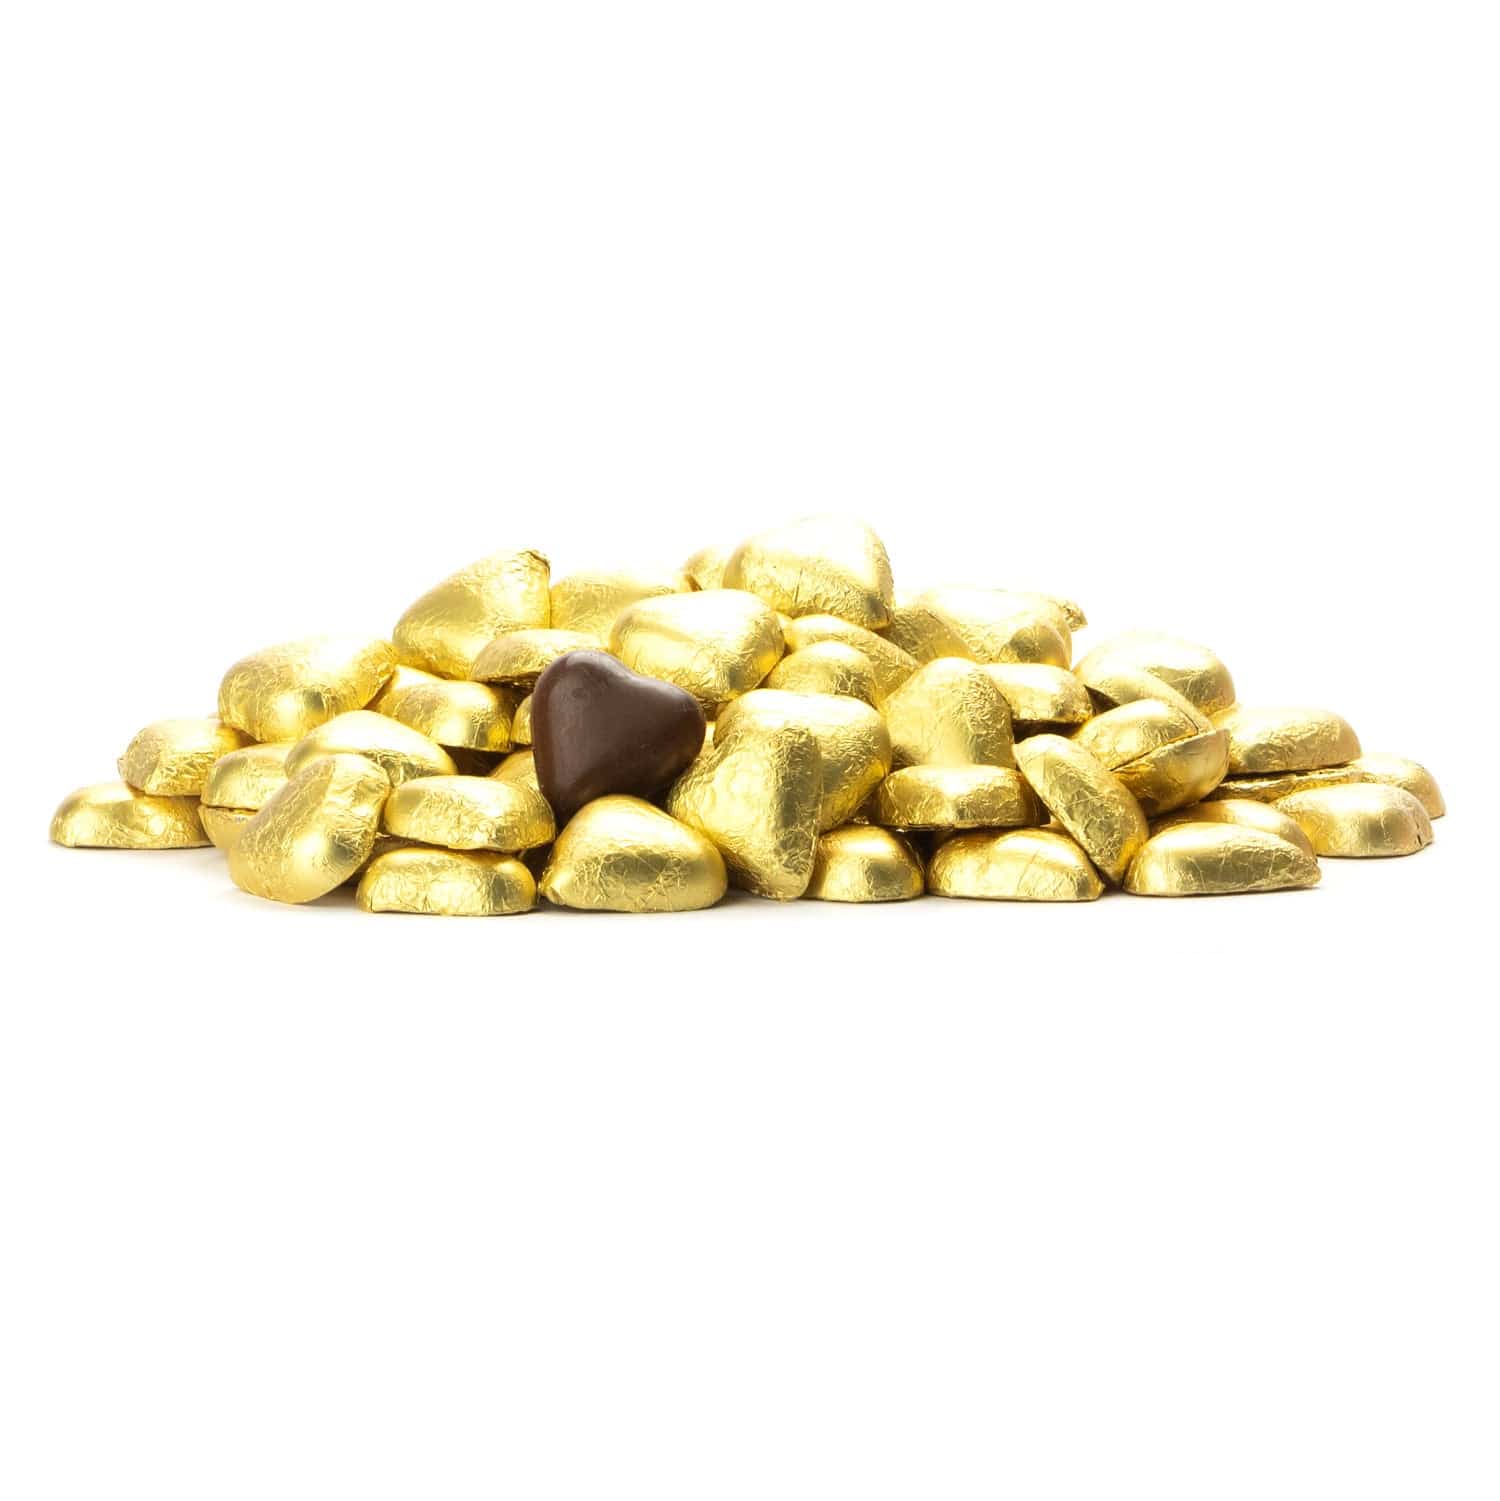 Chocolade hartjes in gouden folie (kilo) - Bedankjes.nl